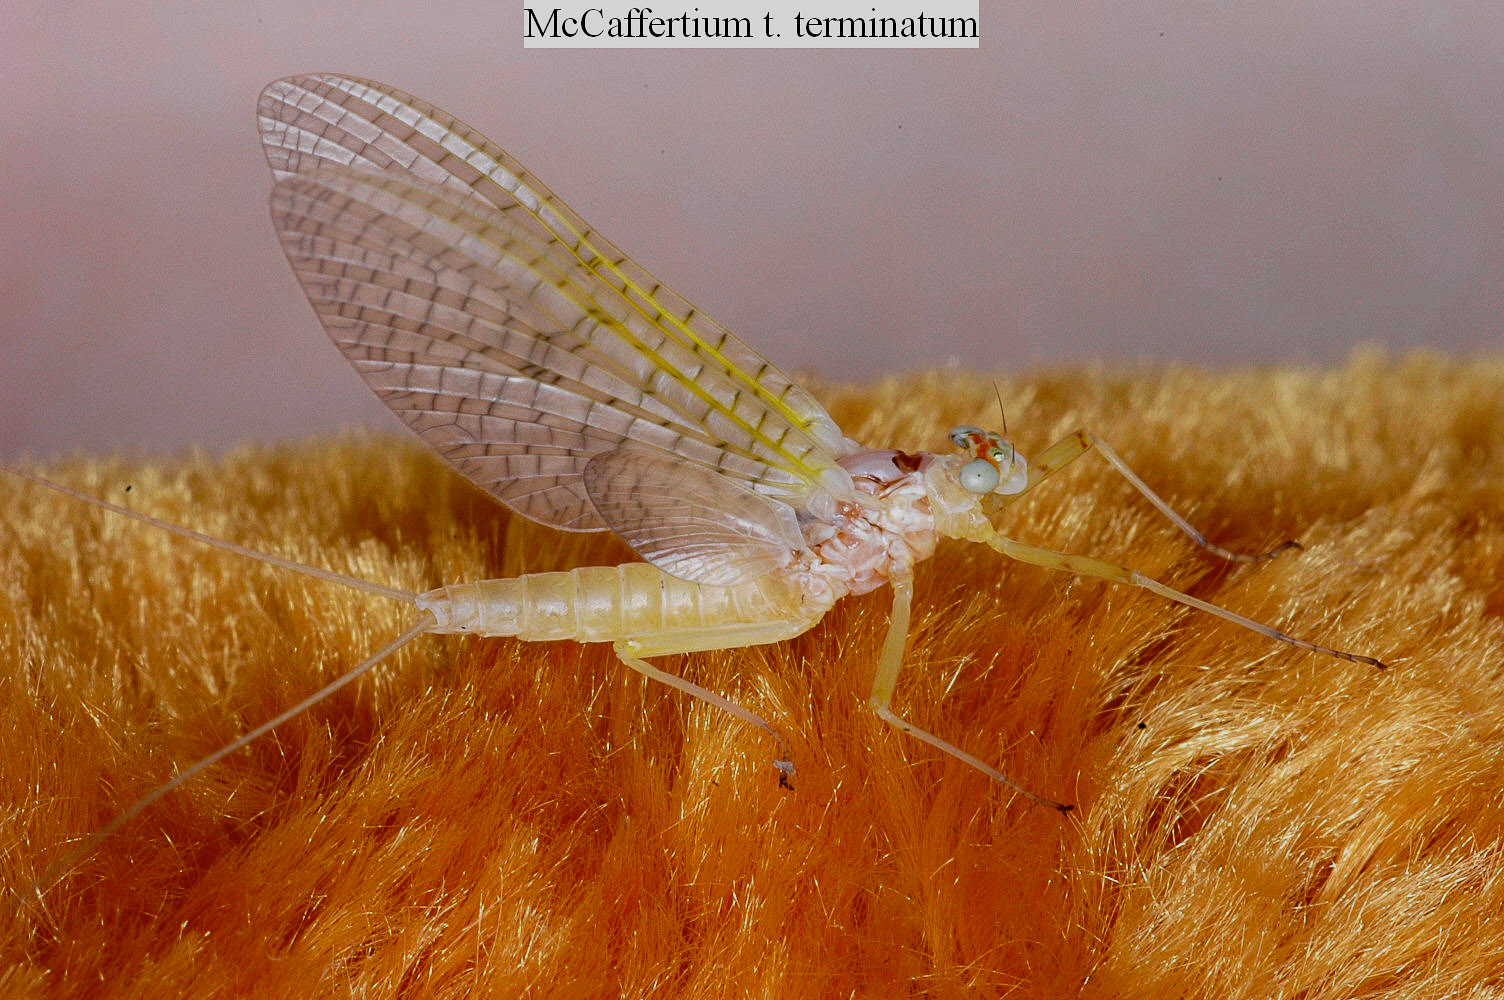 Female Maccaffertium terminatum Mayfly Dun from the Flathead River-Lower in Montana